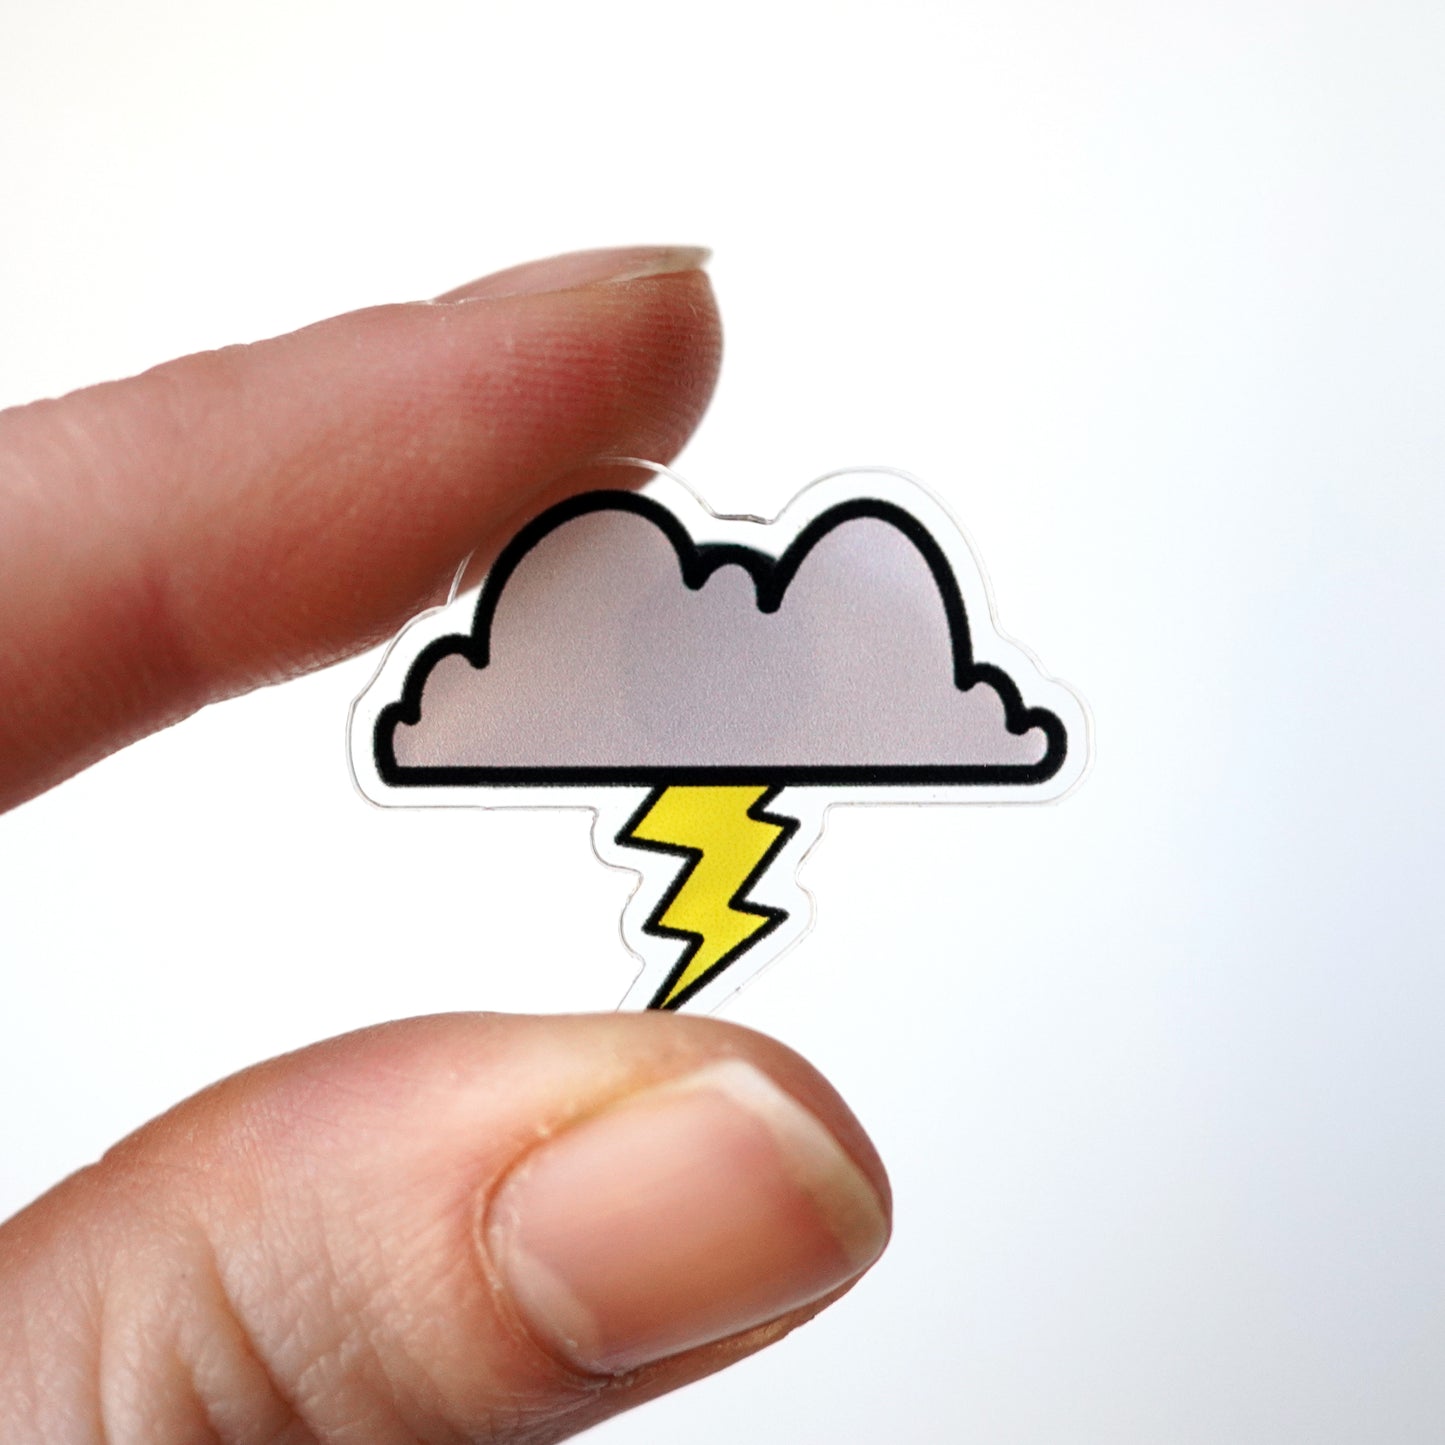 Thunderstorm Cloud Eco-Friendly Acrylic Pin